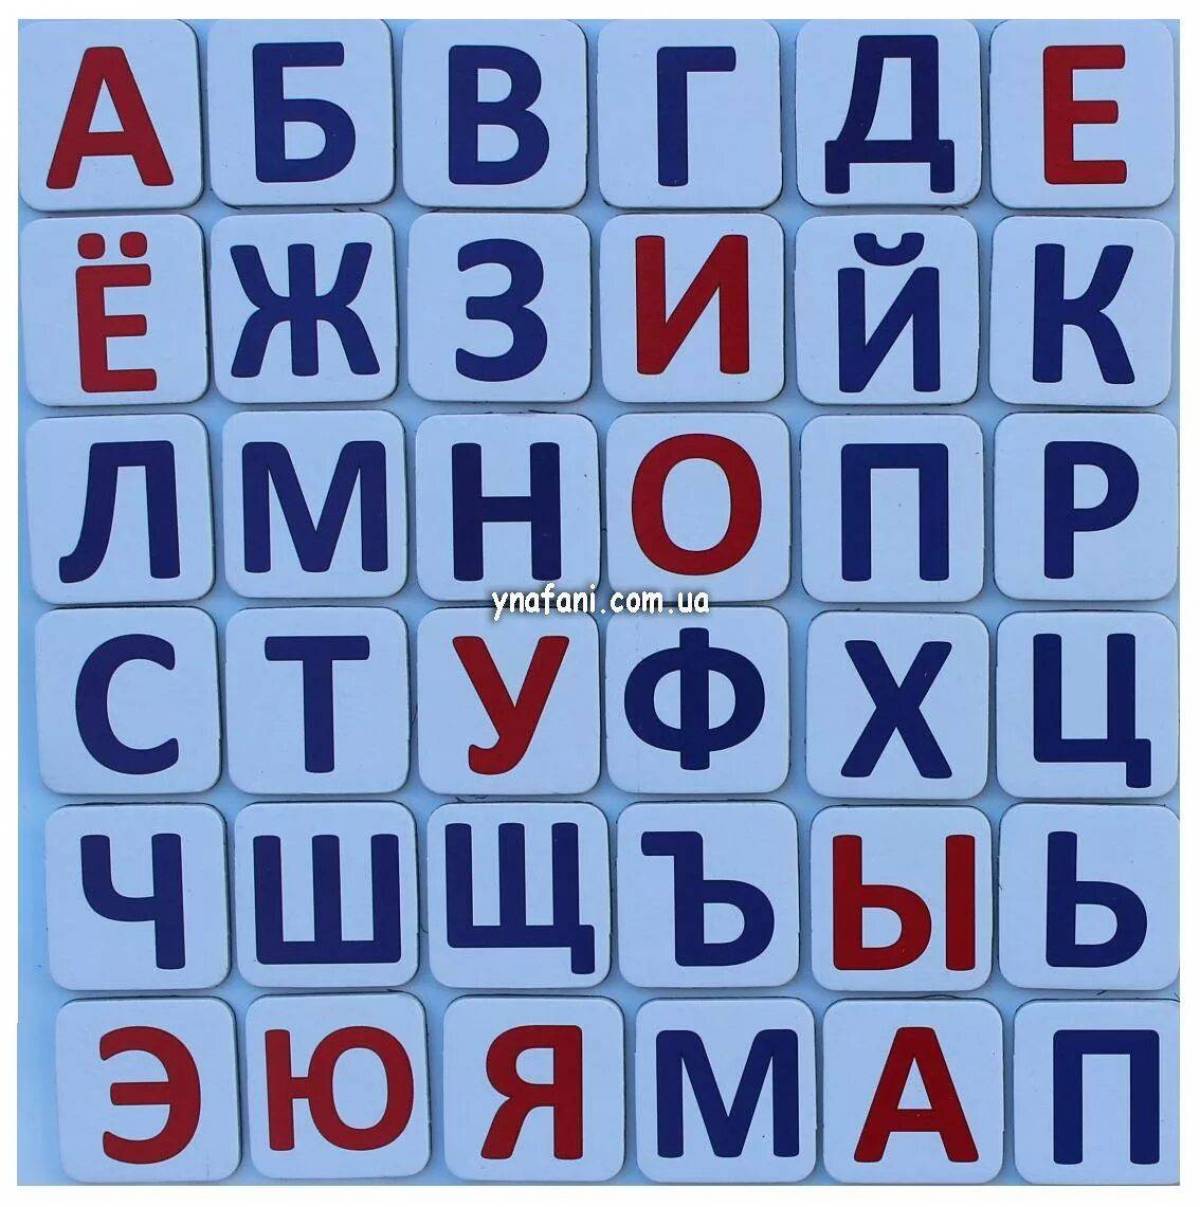 Где найти алфавит. Русский алфавит. Алфавит и буквы. Алфати. Алфавит по буквам.